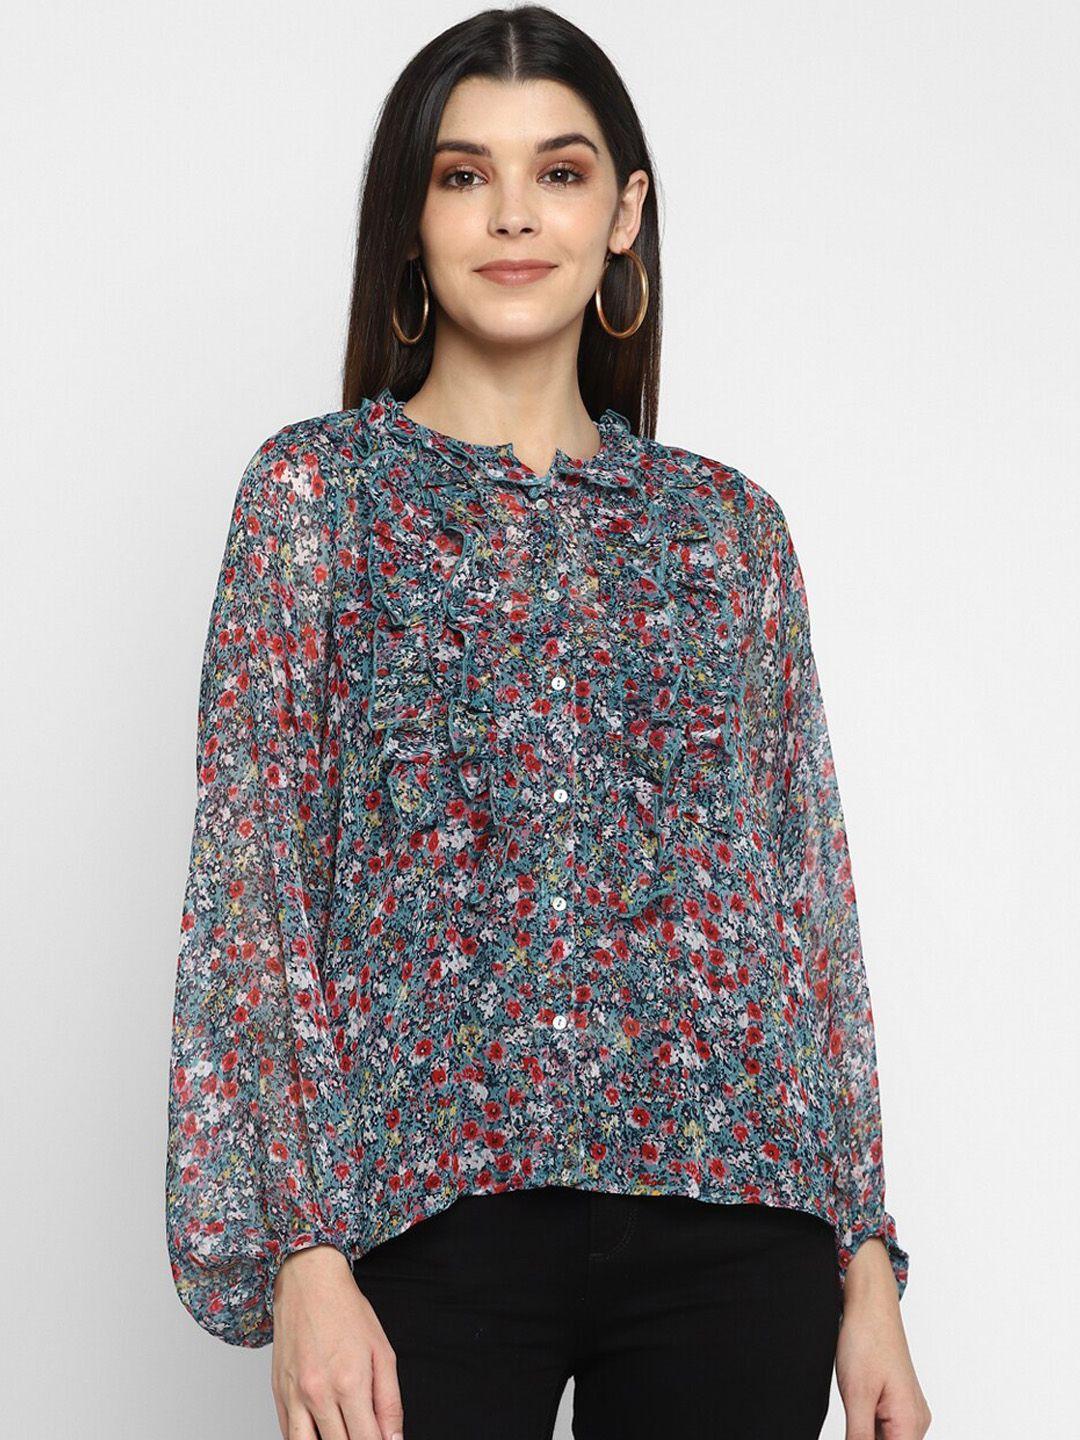 aditi-wasan-women-multicoloured-floral-printed-shirt-style-top